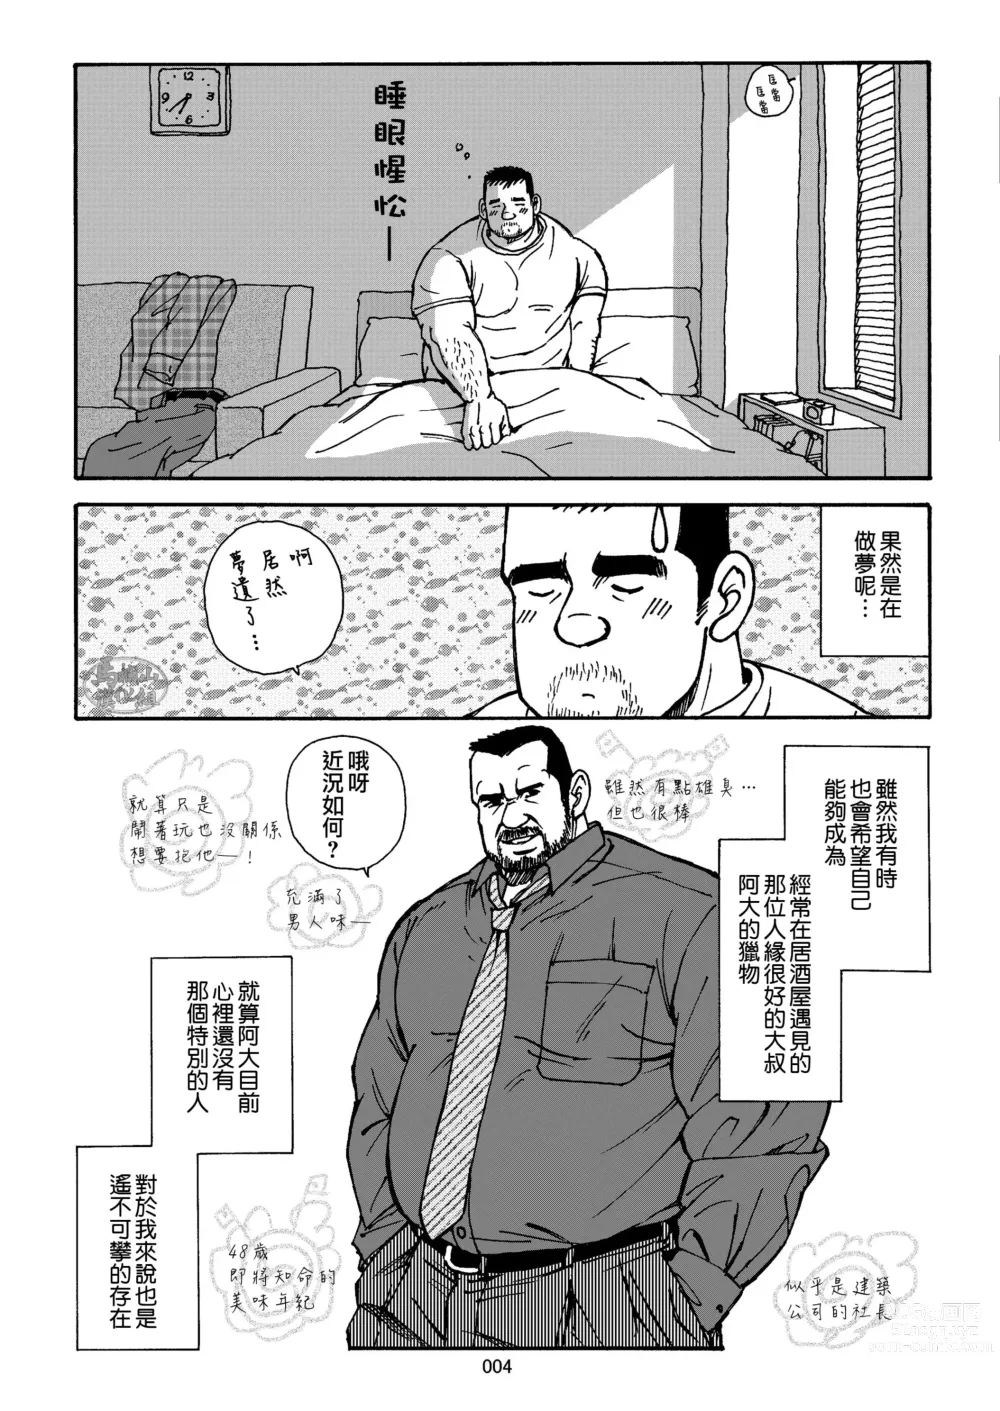 Page 4 of manga おいしい性活